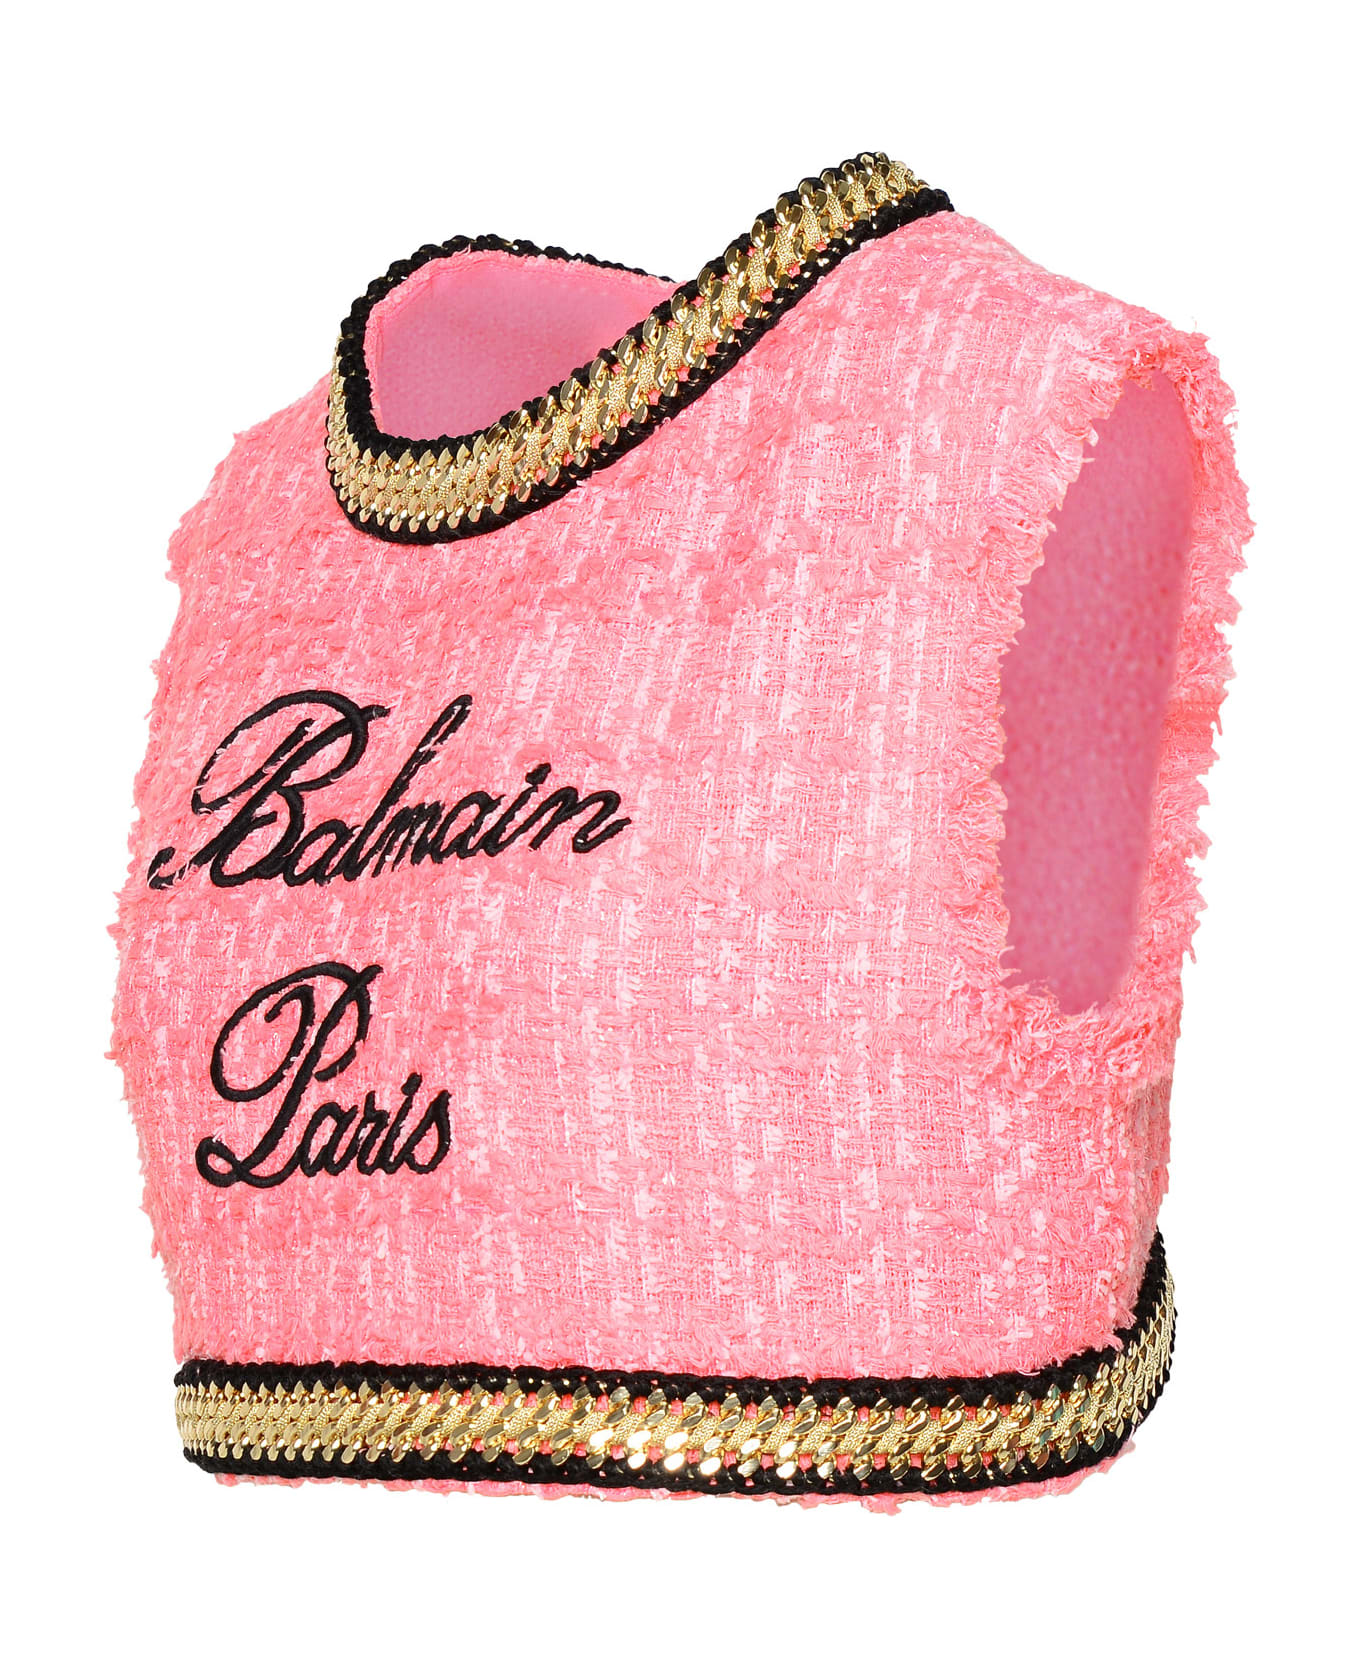 Balmain Tweed Short Top - Pink タンクトップ